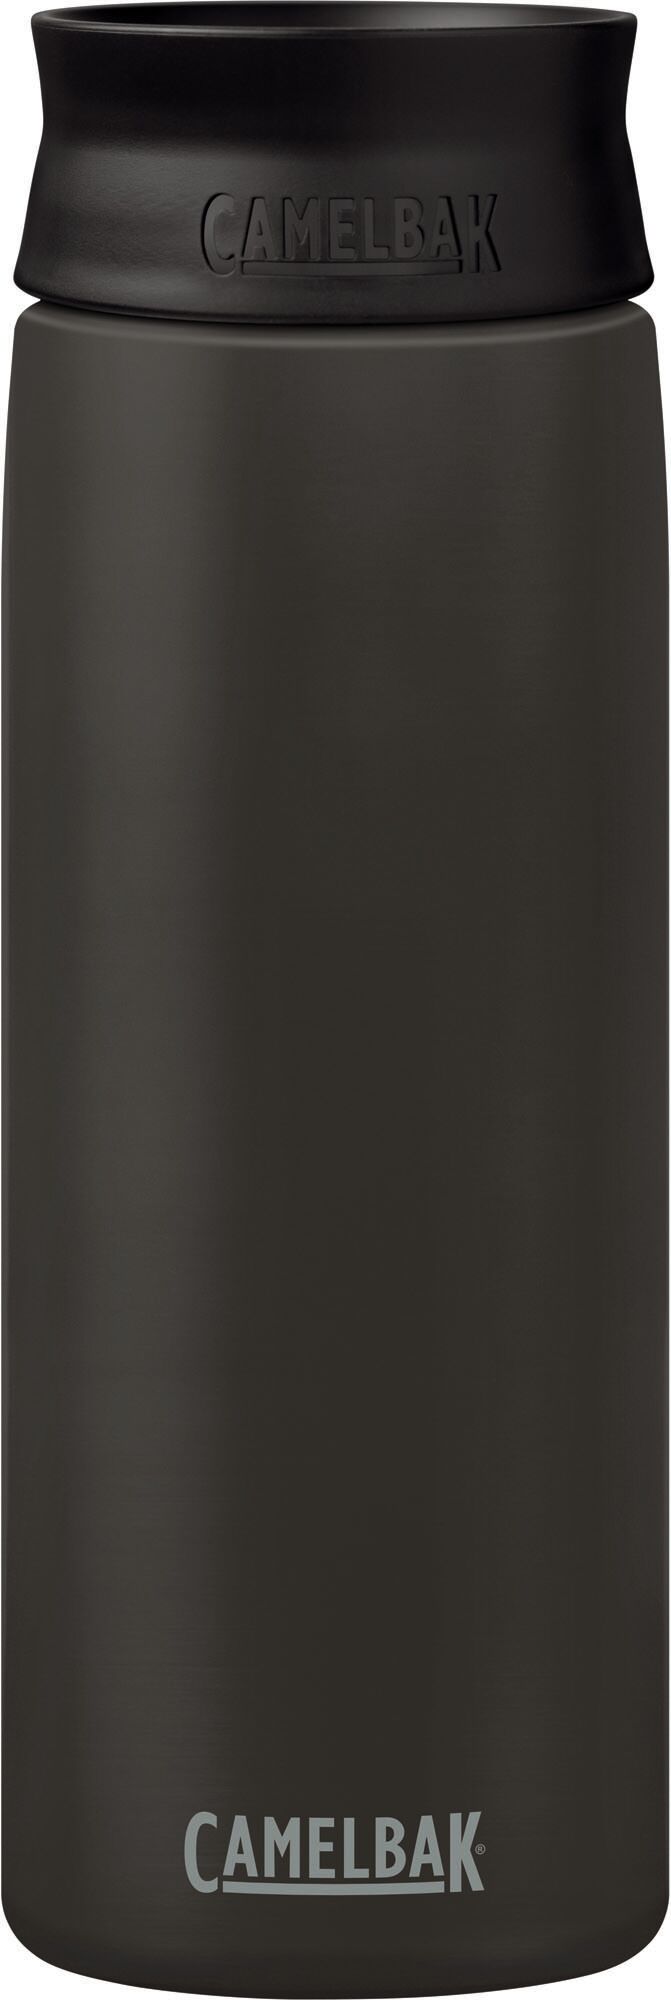 Camelbak Hot Cap Vacuum Stainless 600 mL - Vacuum flask